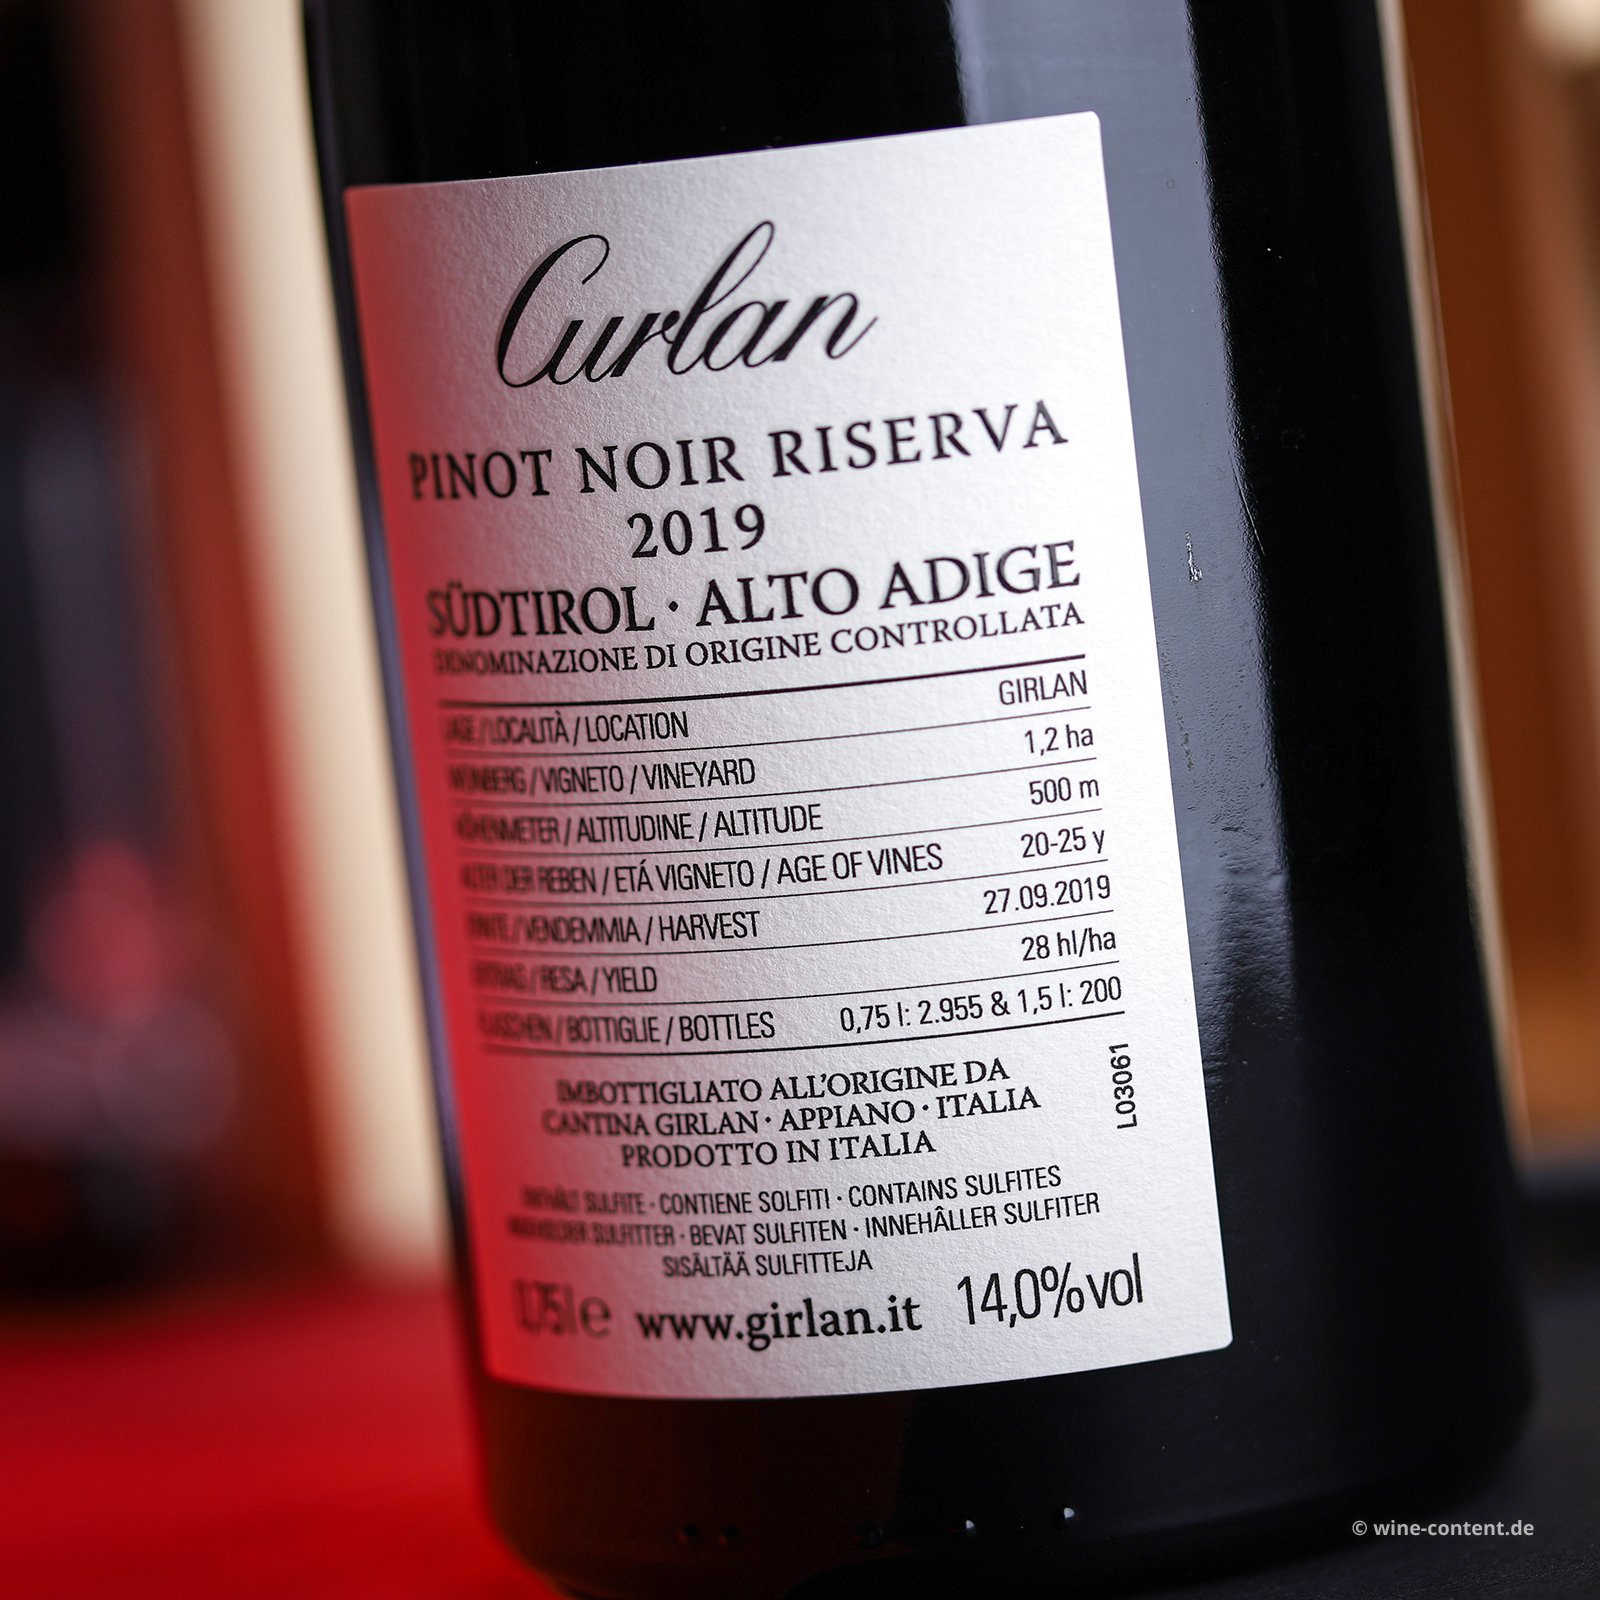 Pinot Noir Riserva 2019 Curlan